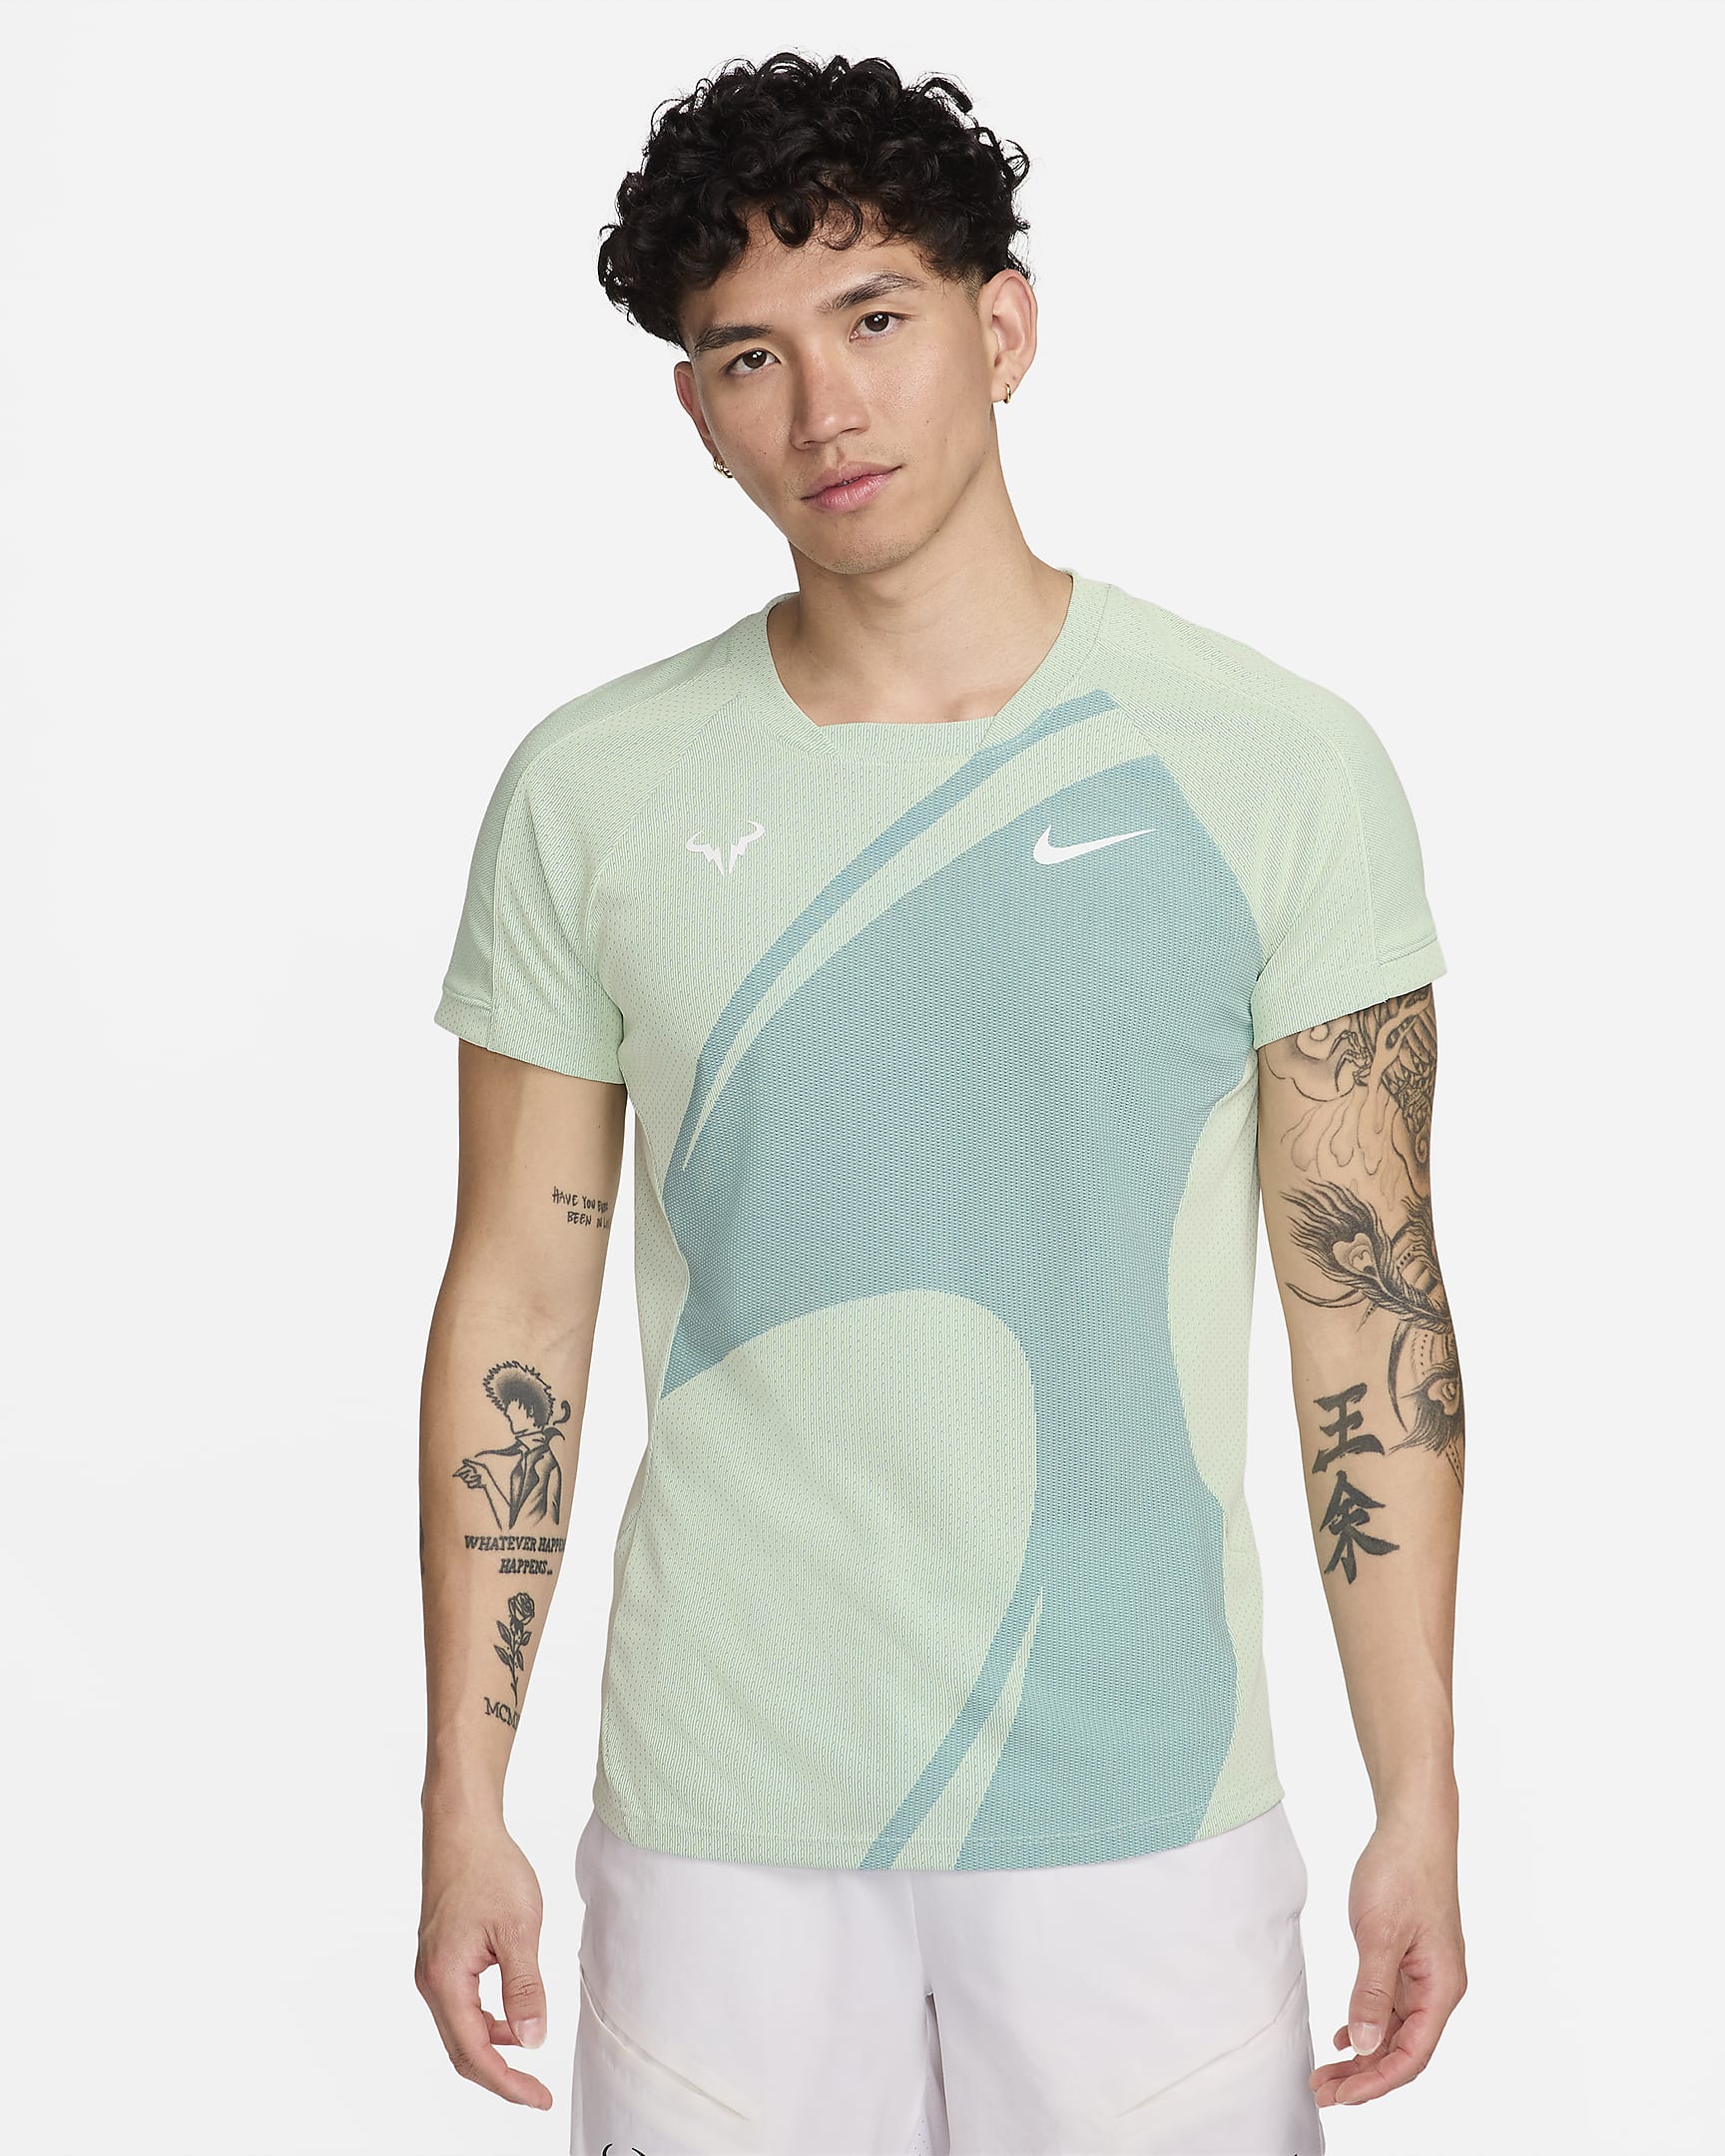 Rafa Men's Nike Dri-FIT ADV Short-Sleeve Tennis Top. Nike SG